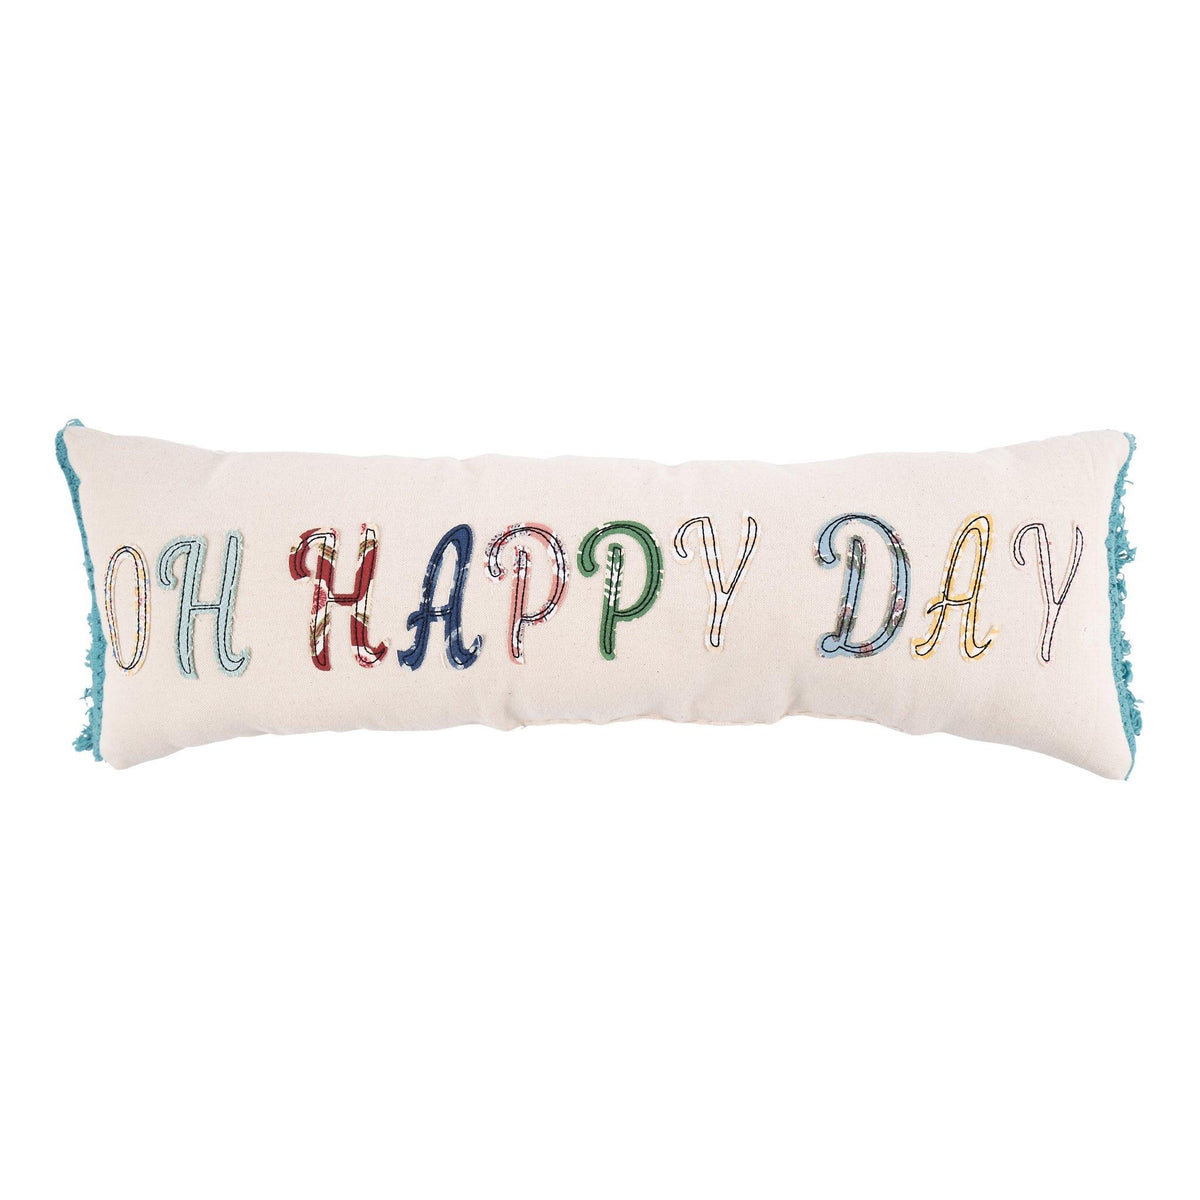 Happy Day Pillow - GLORY HAUS 